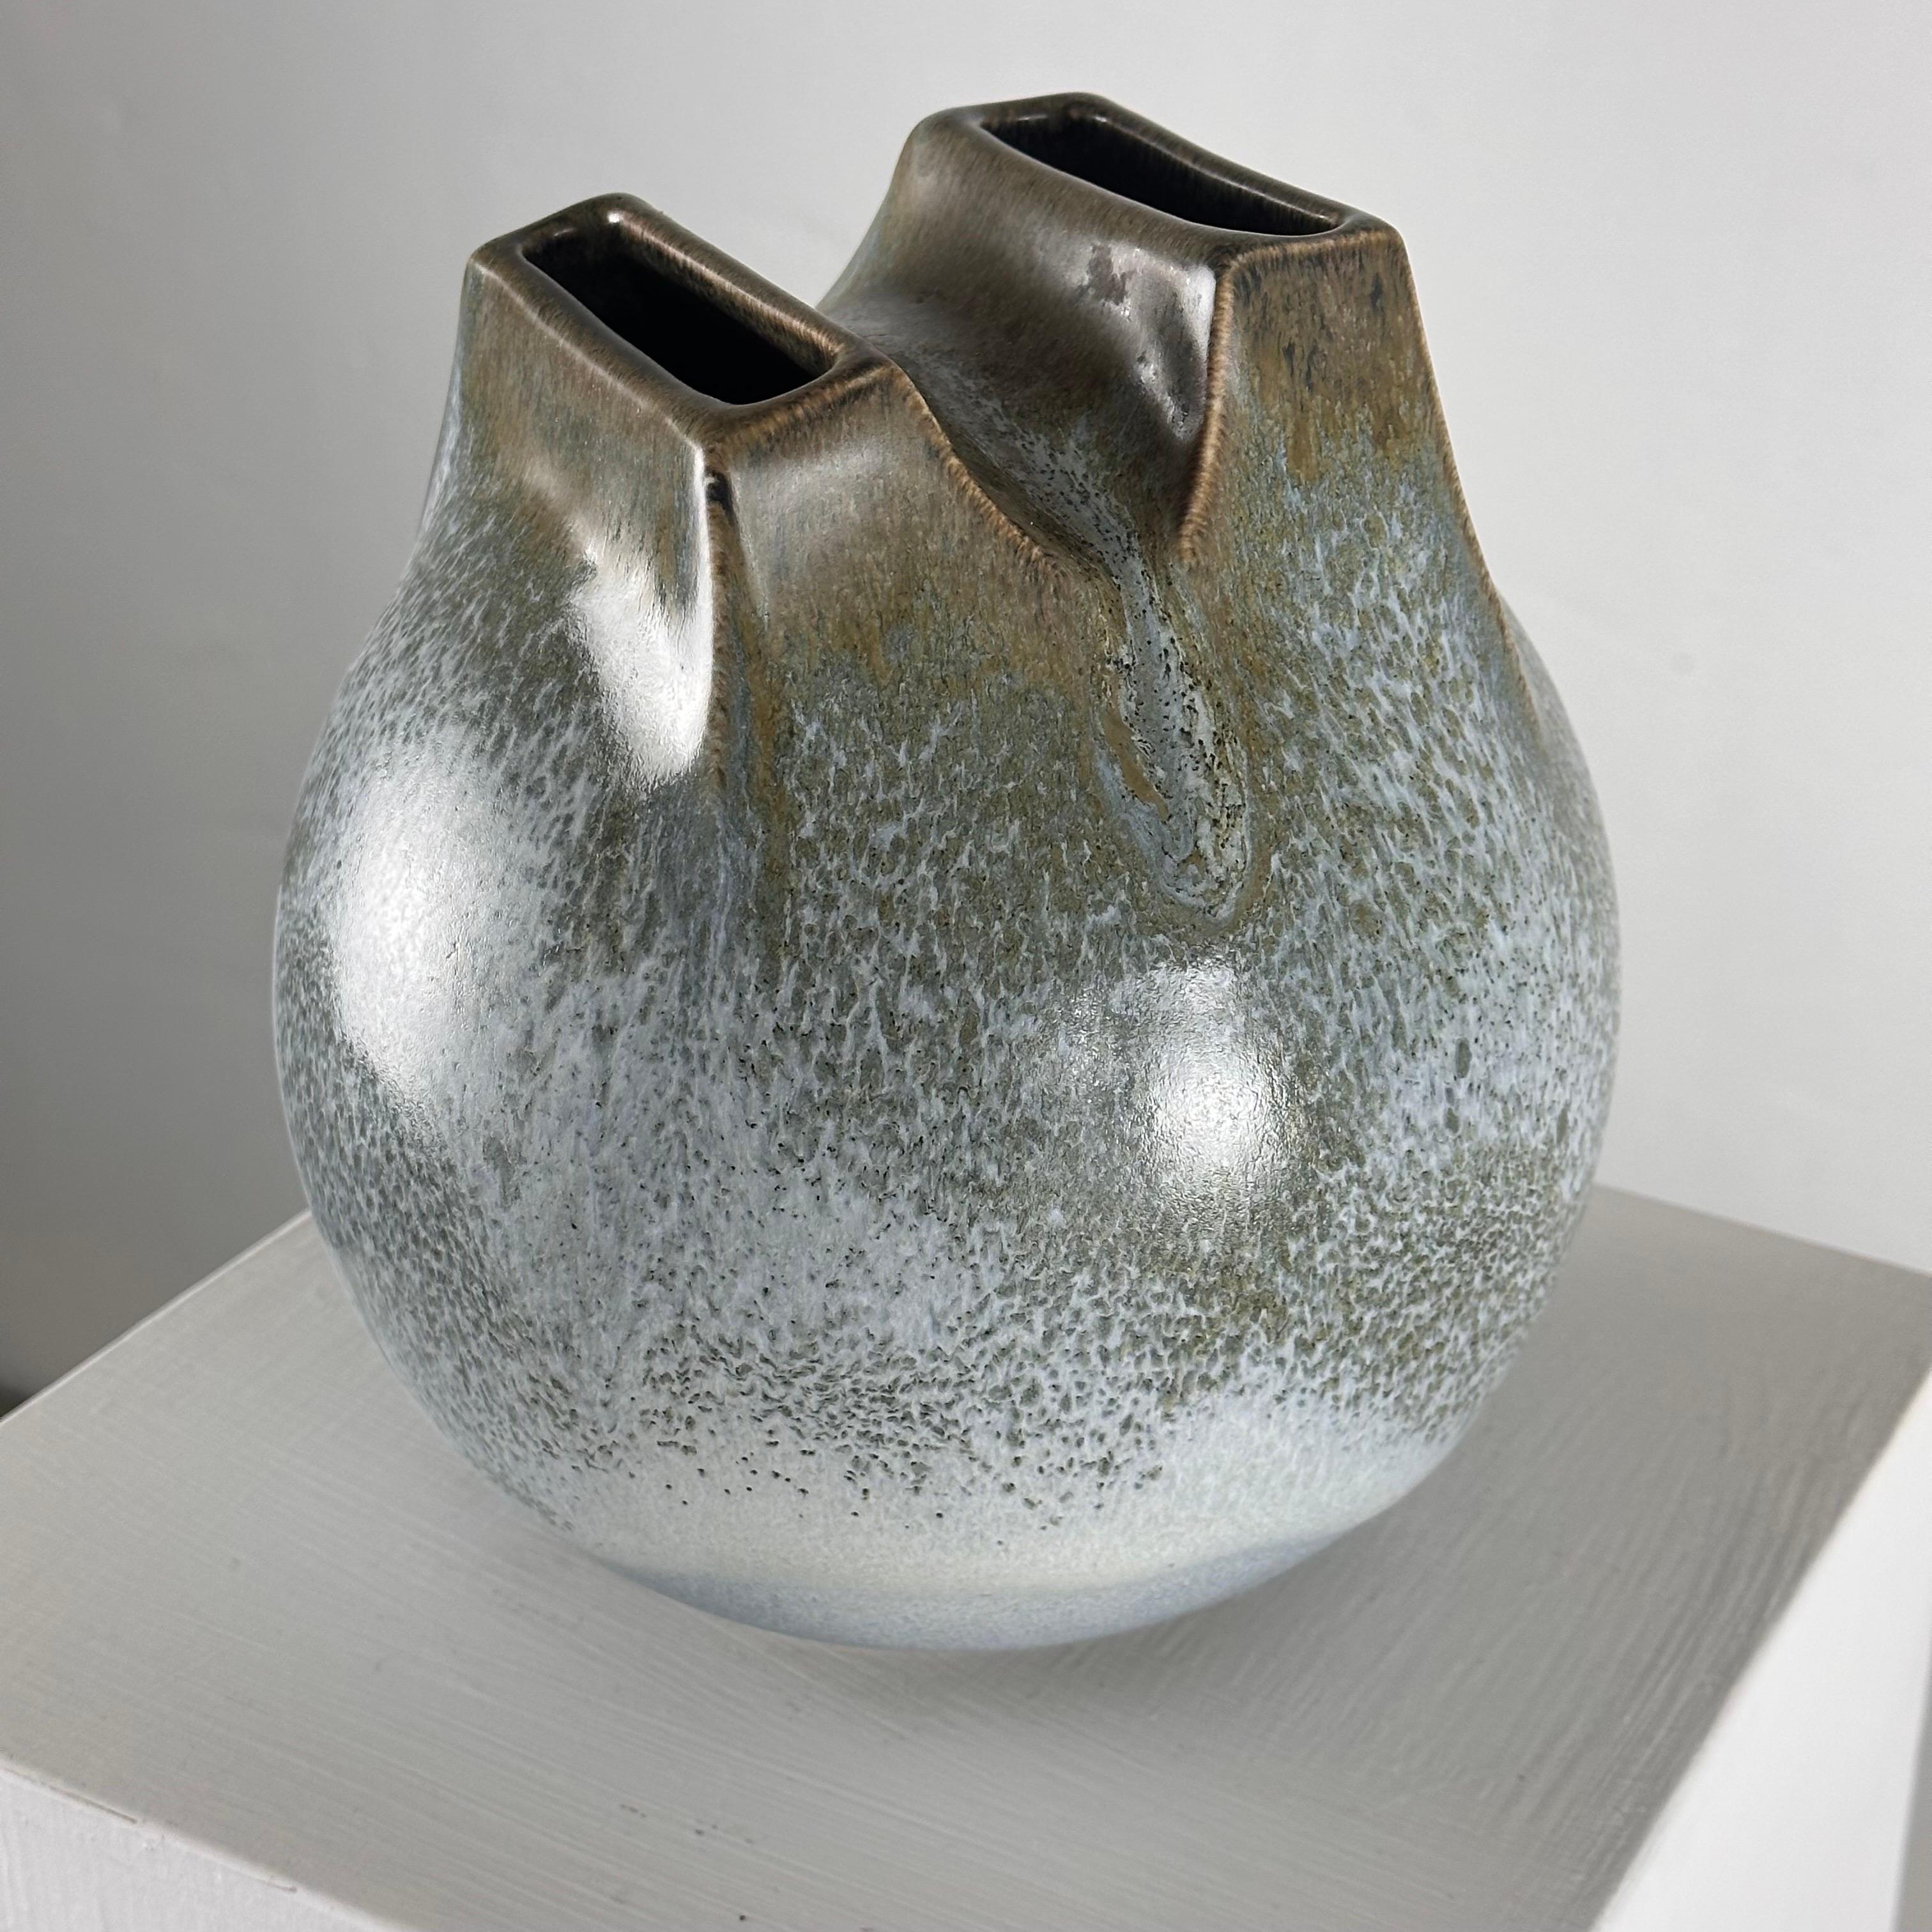 Unique 1970s Franco Bucci Ceramic Vase: 'Whistle' with Two Mouths For Sale 4